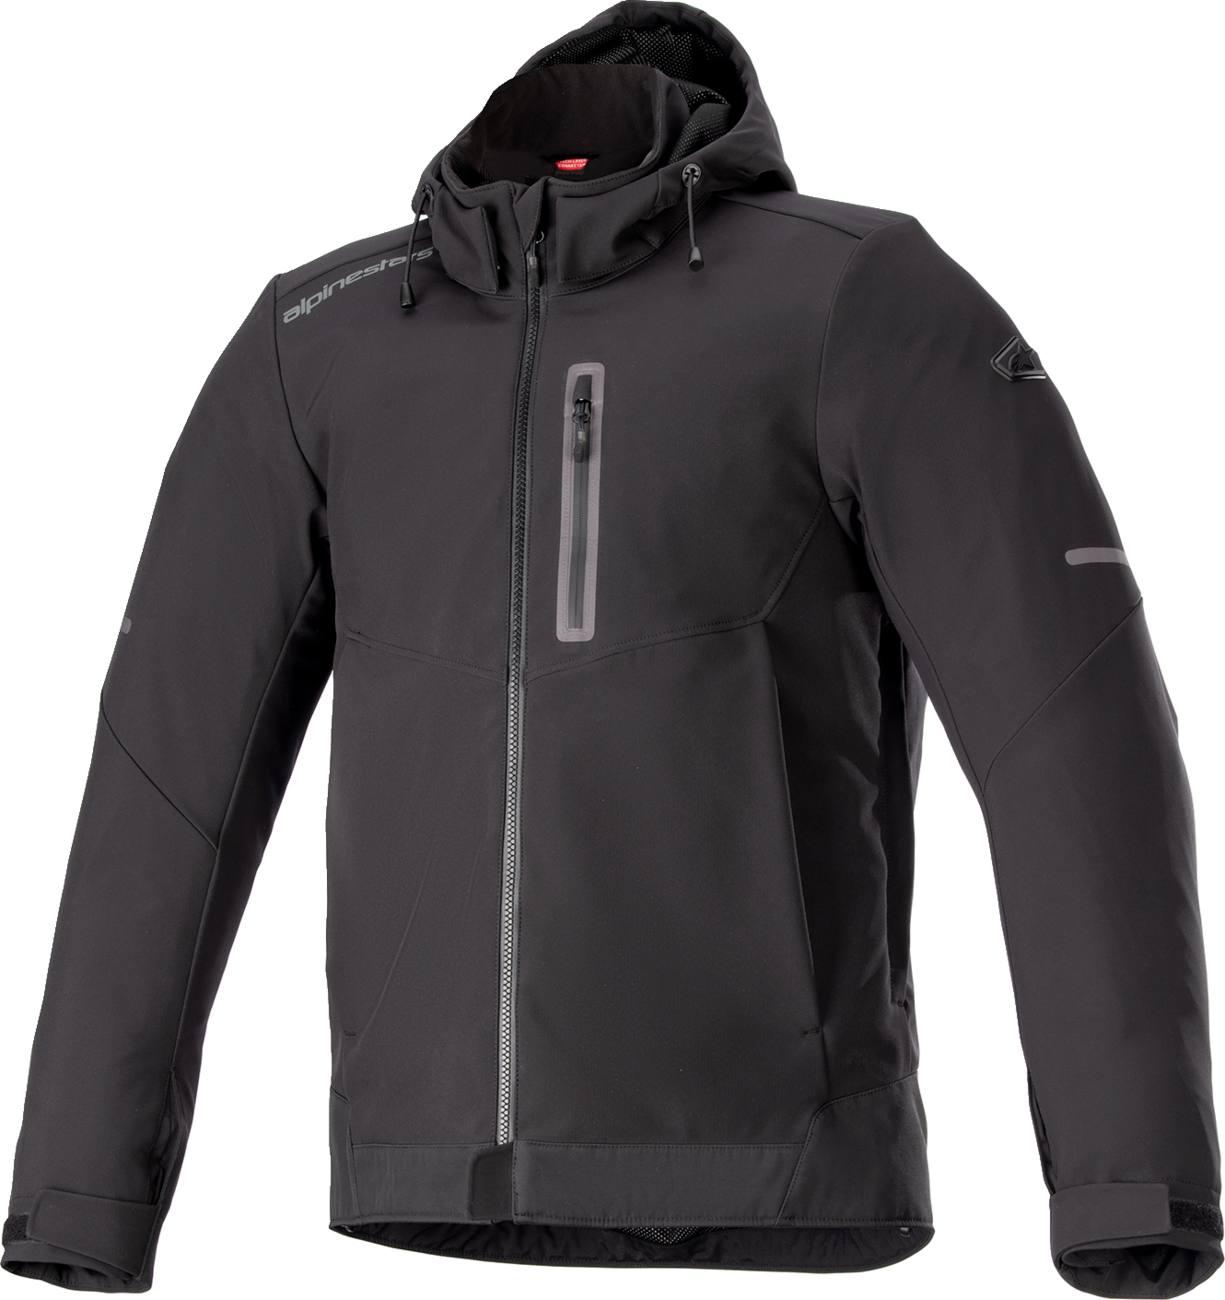 ALPINESTARS Neo Waterproof Jacket - Black - XL 4208023-1100-XL